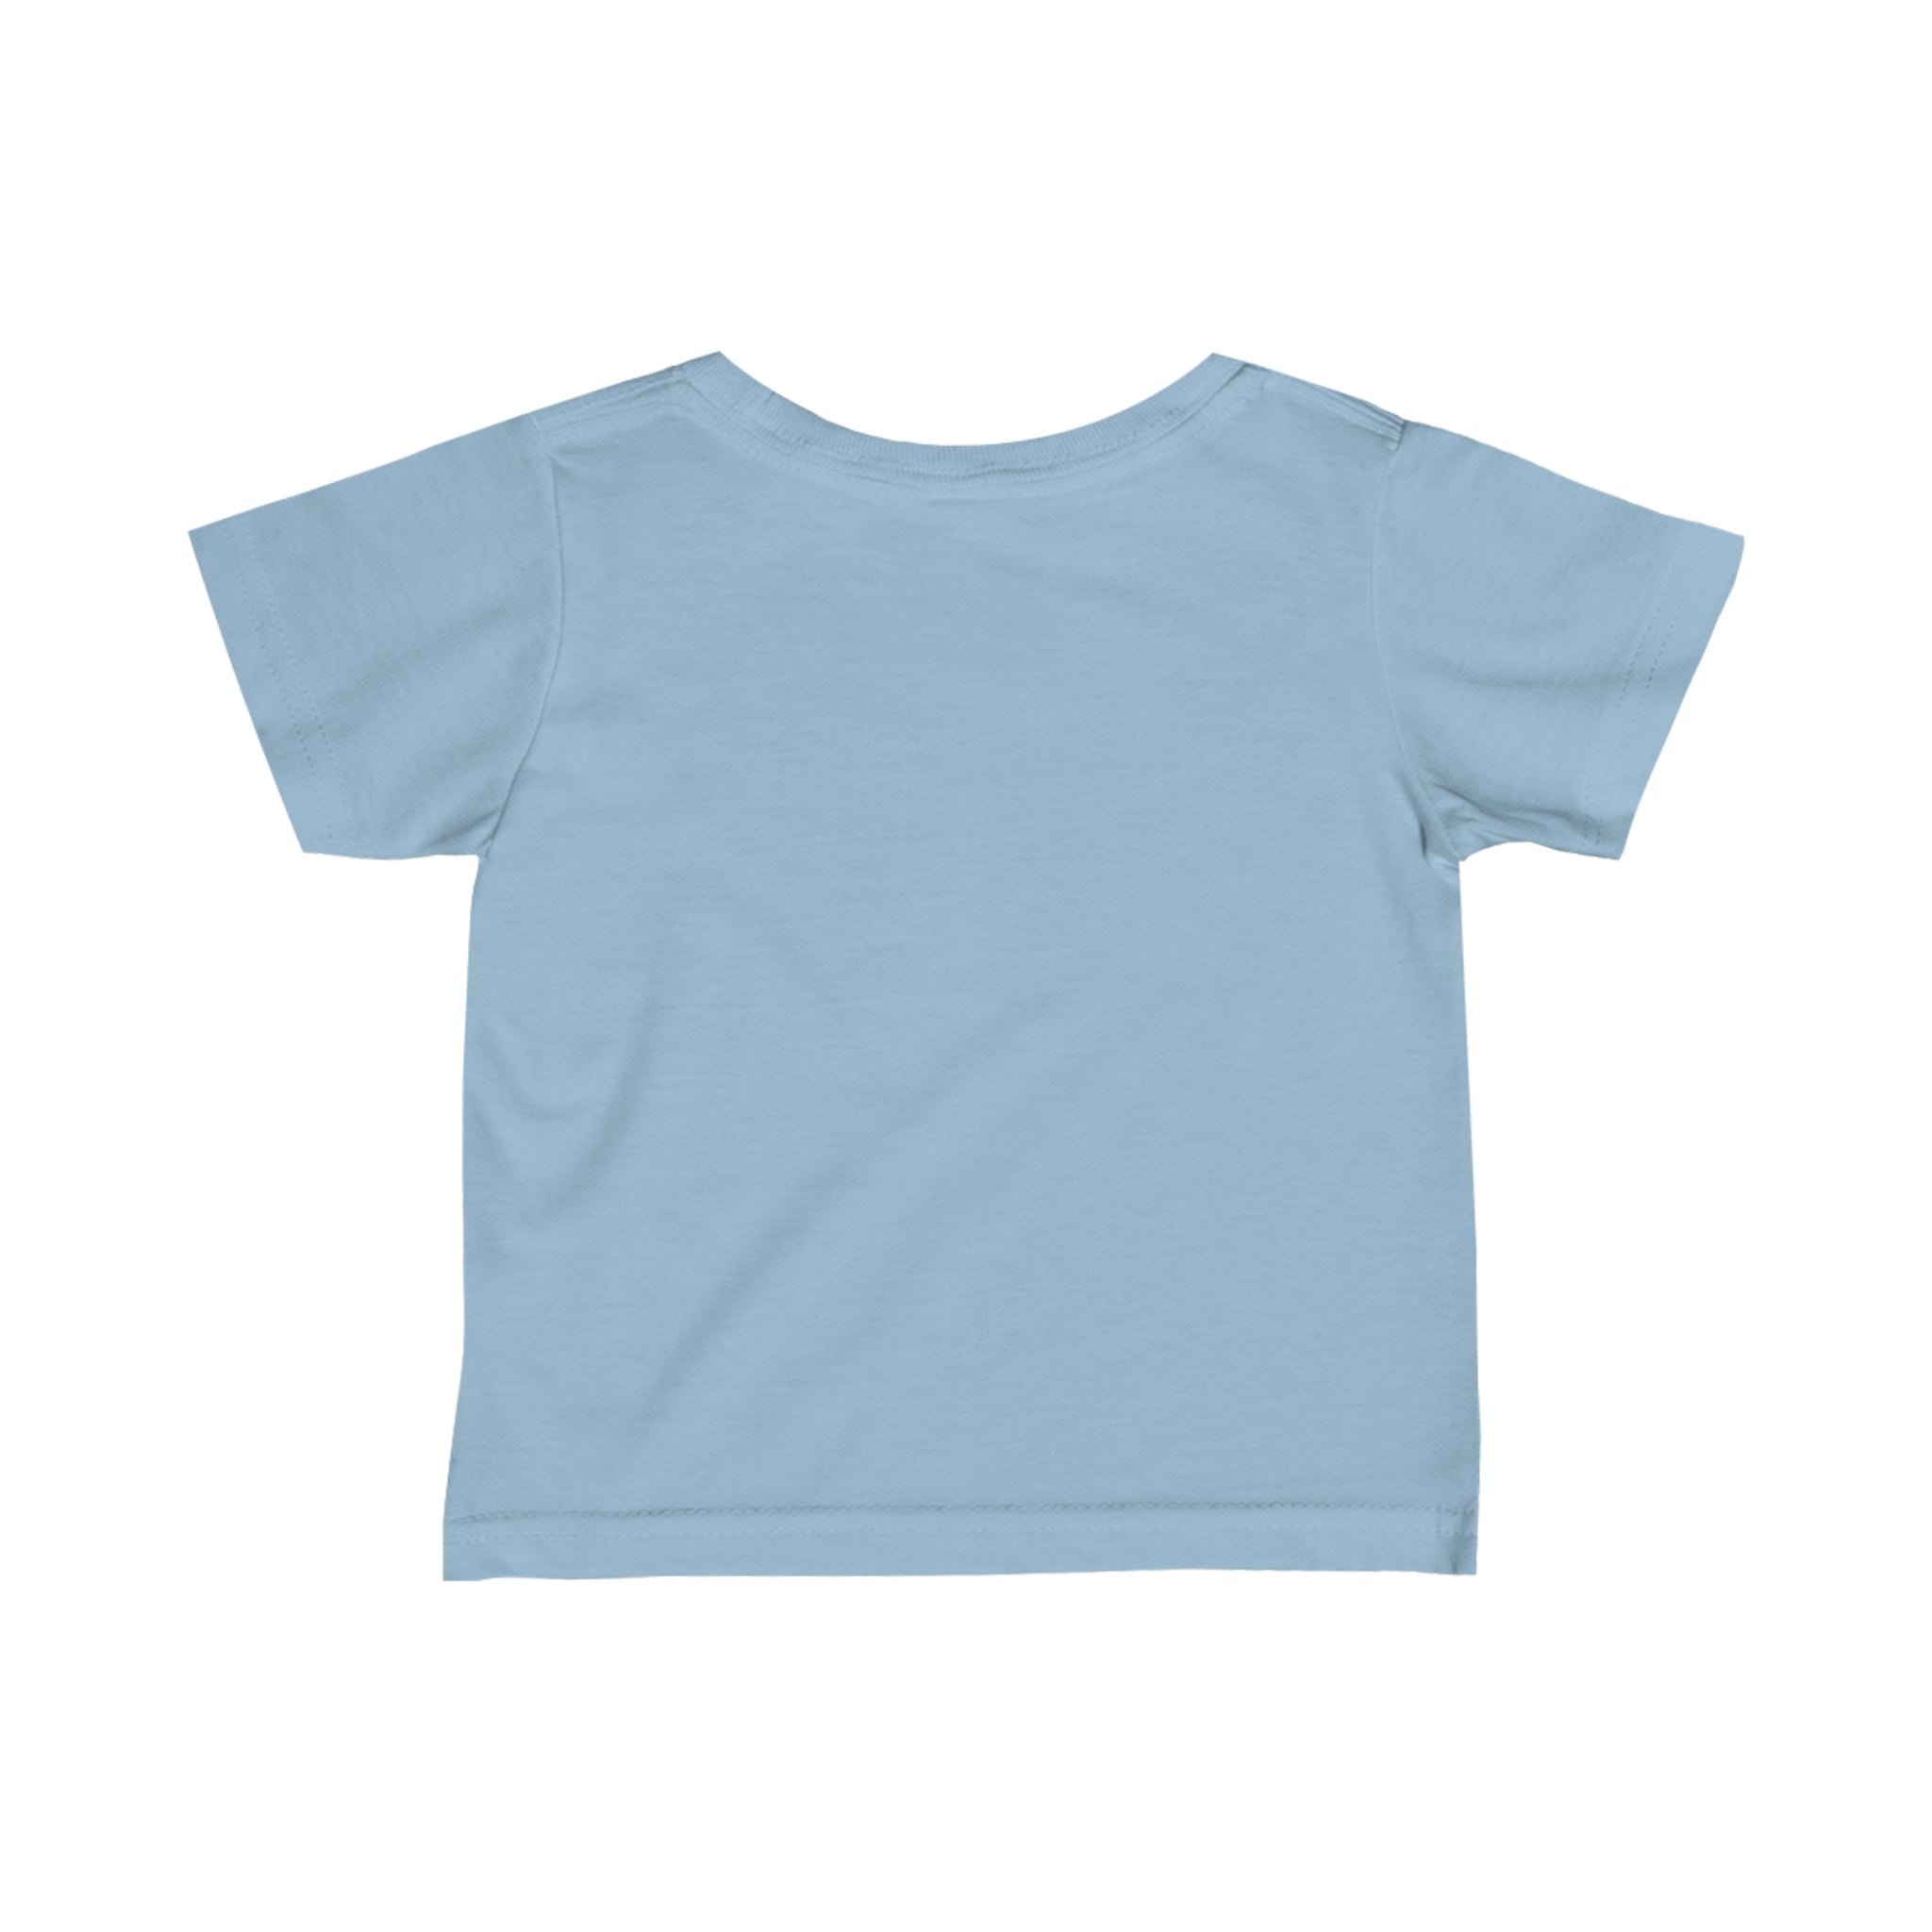 Infants Fine Jersey 4th July T-Shirt